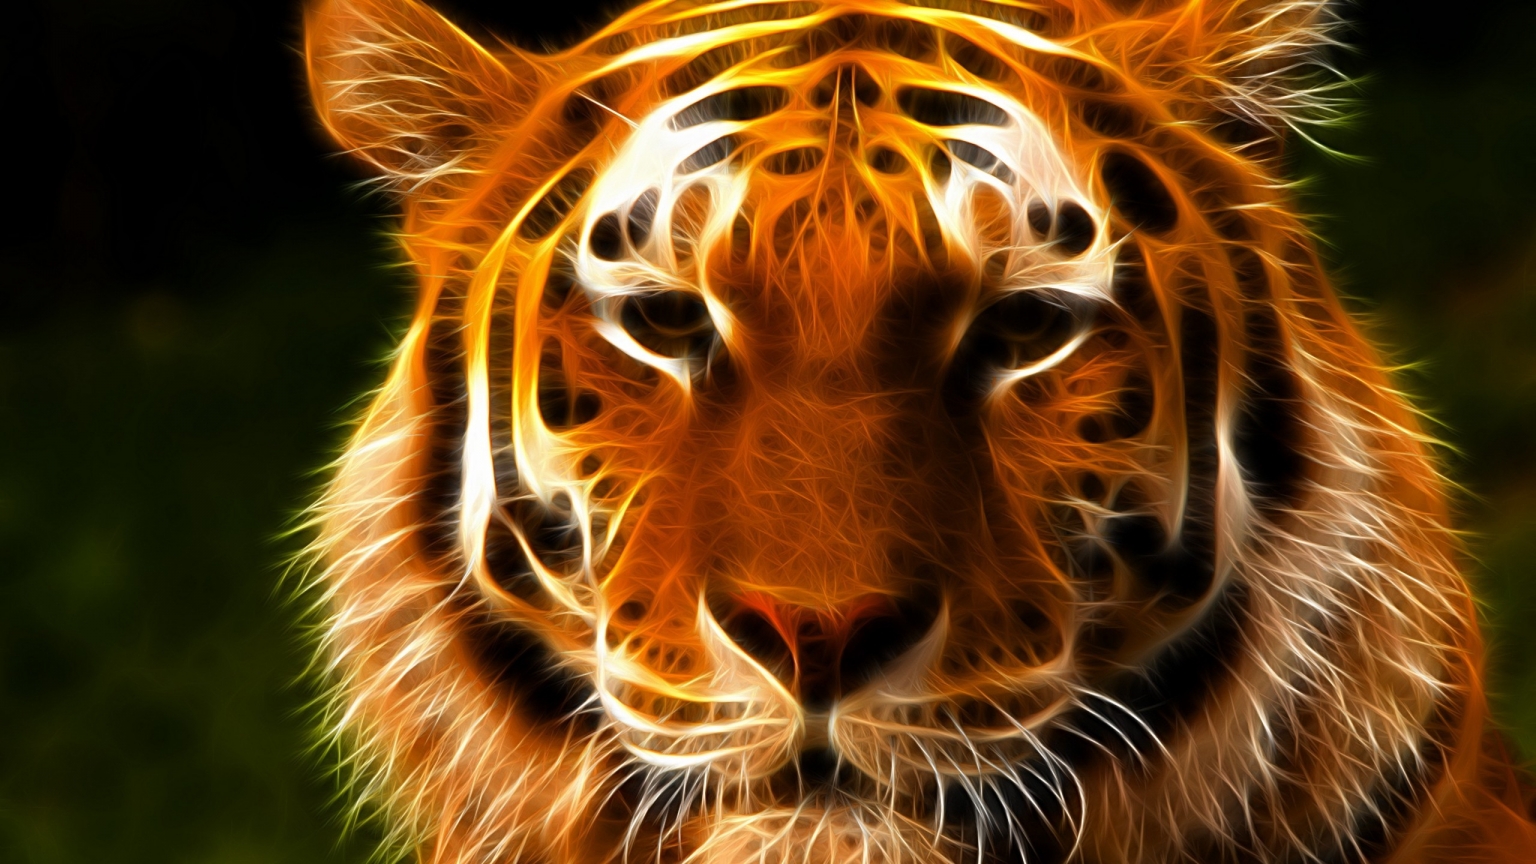 Tiger Face Art for 1536 x 864 HDTV resolution